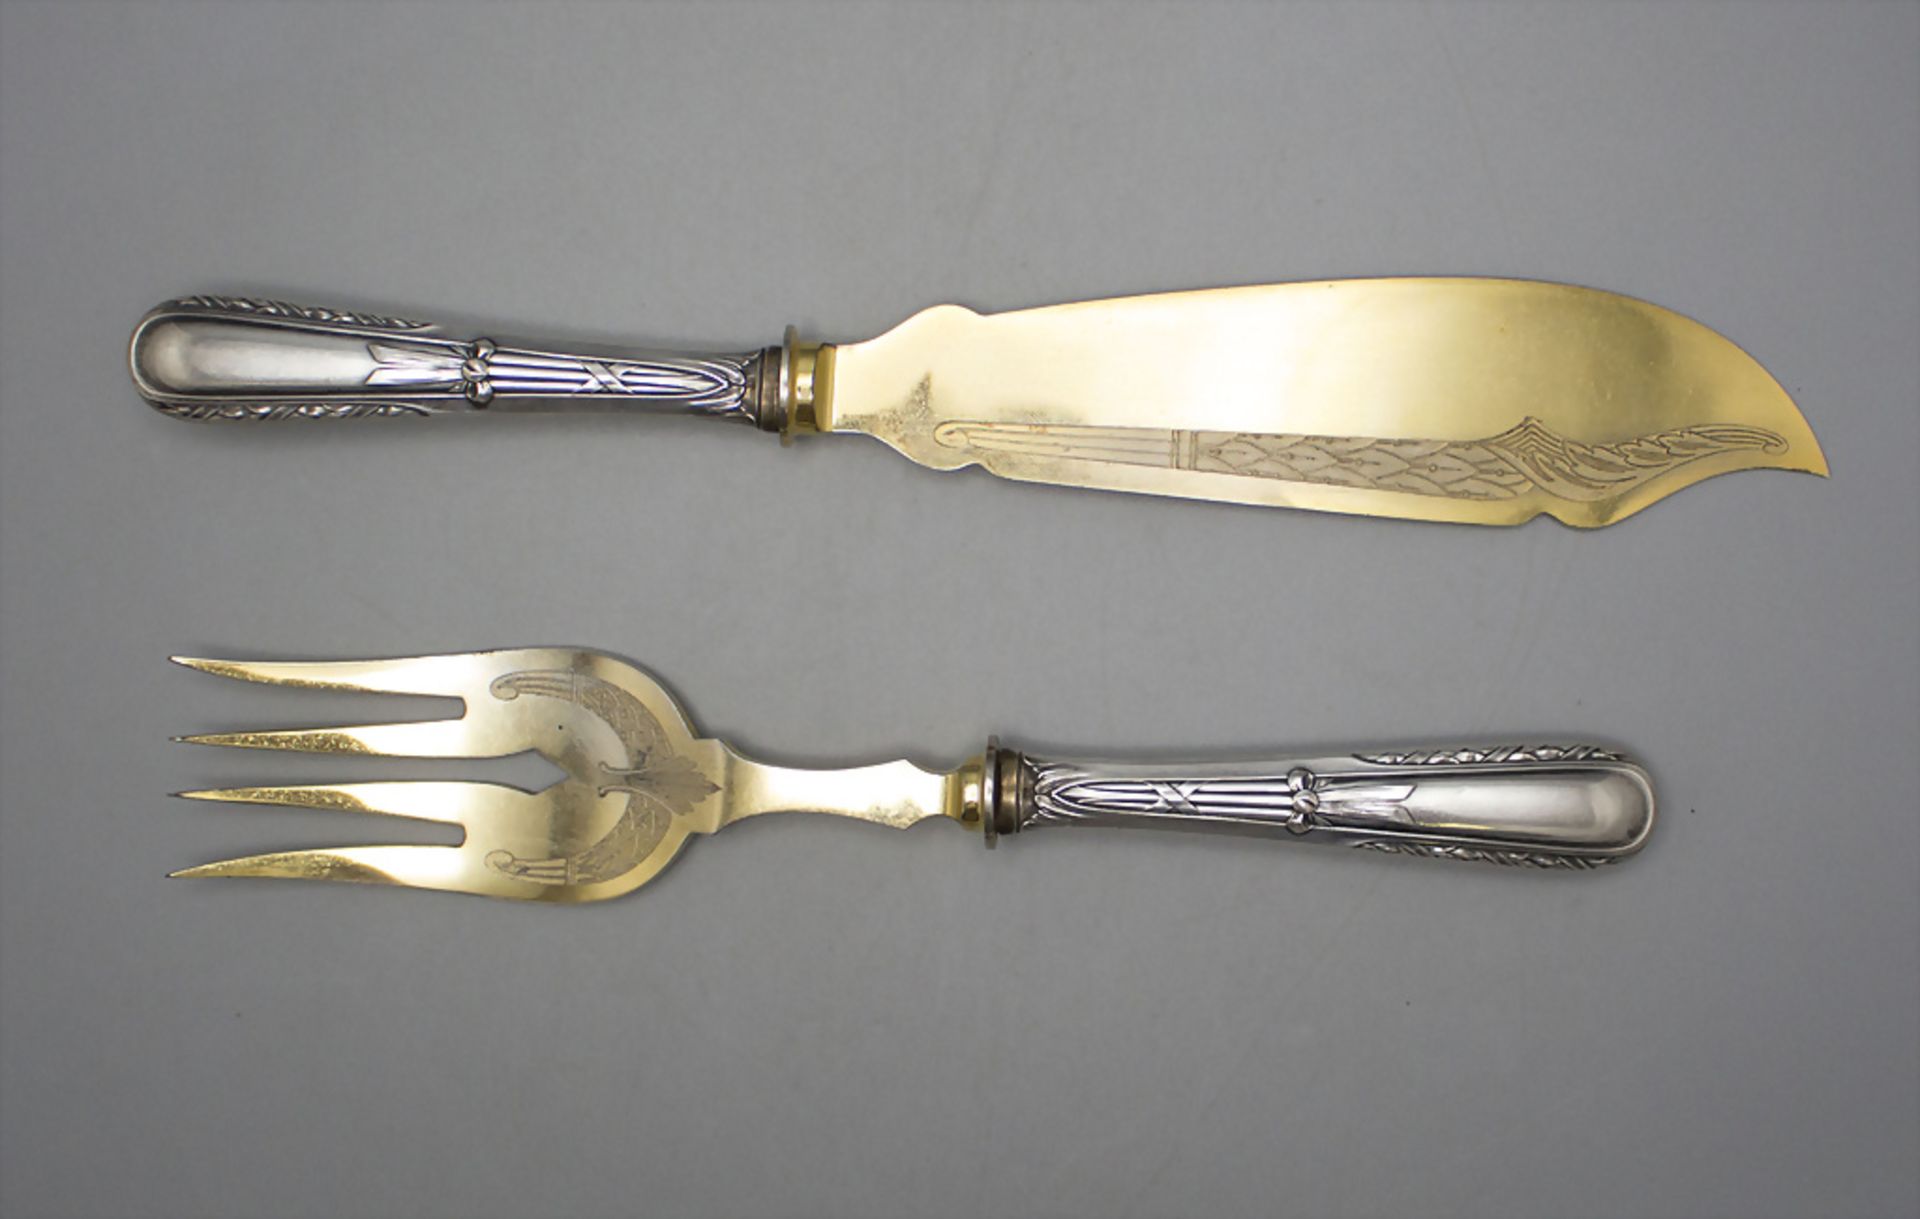 2 Teile Vorlegebesteck / A 2-piece set of serving cutlery, um 1900